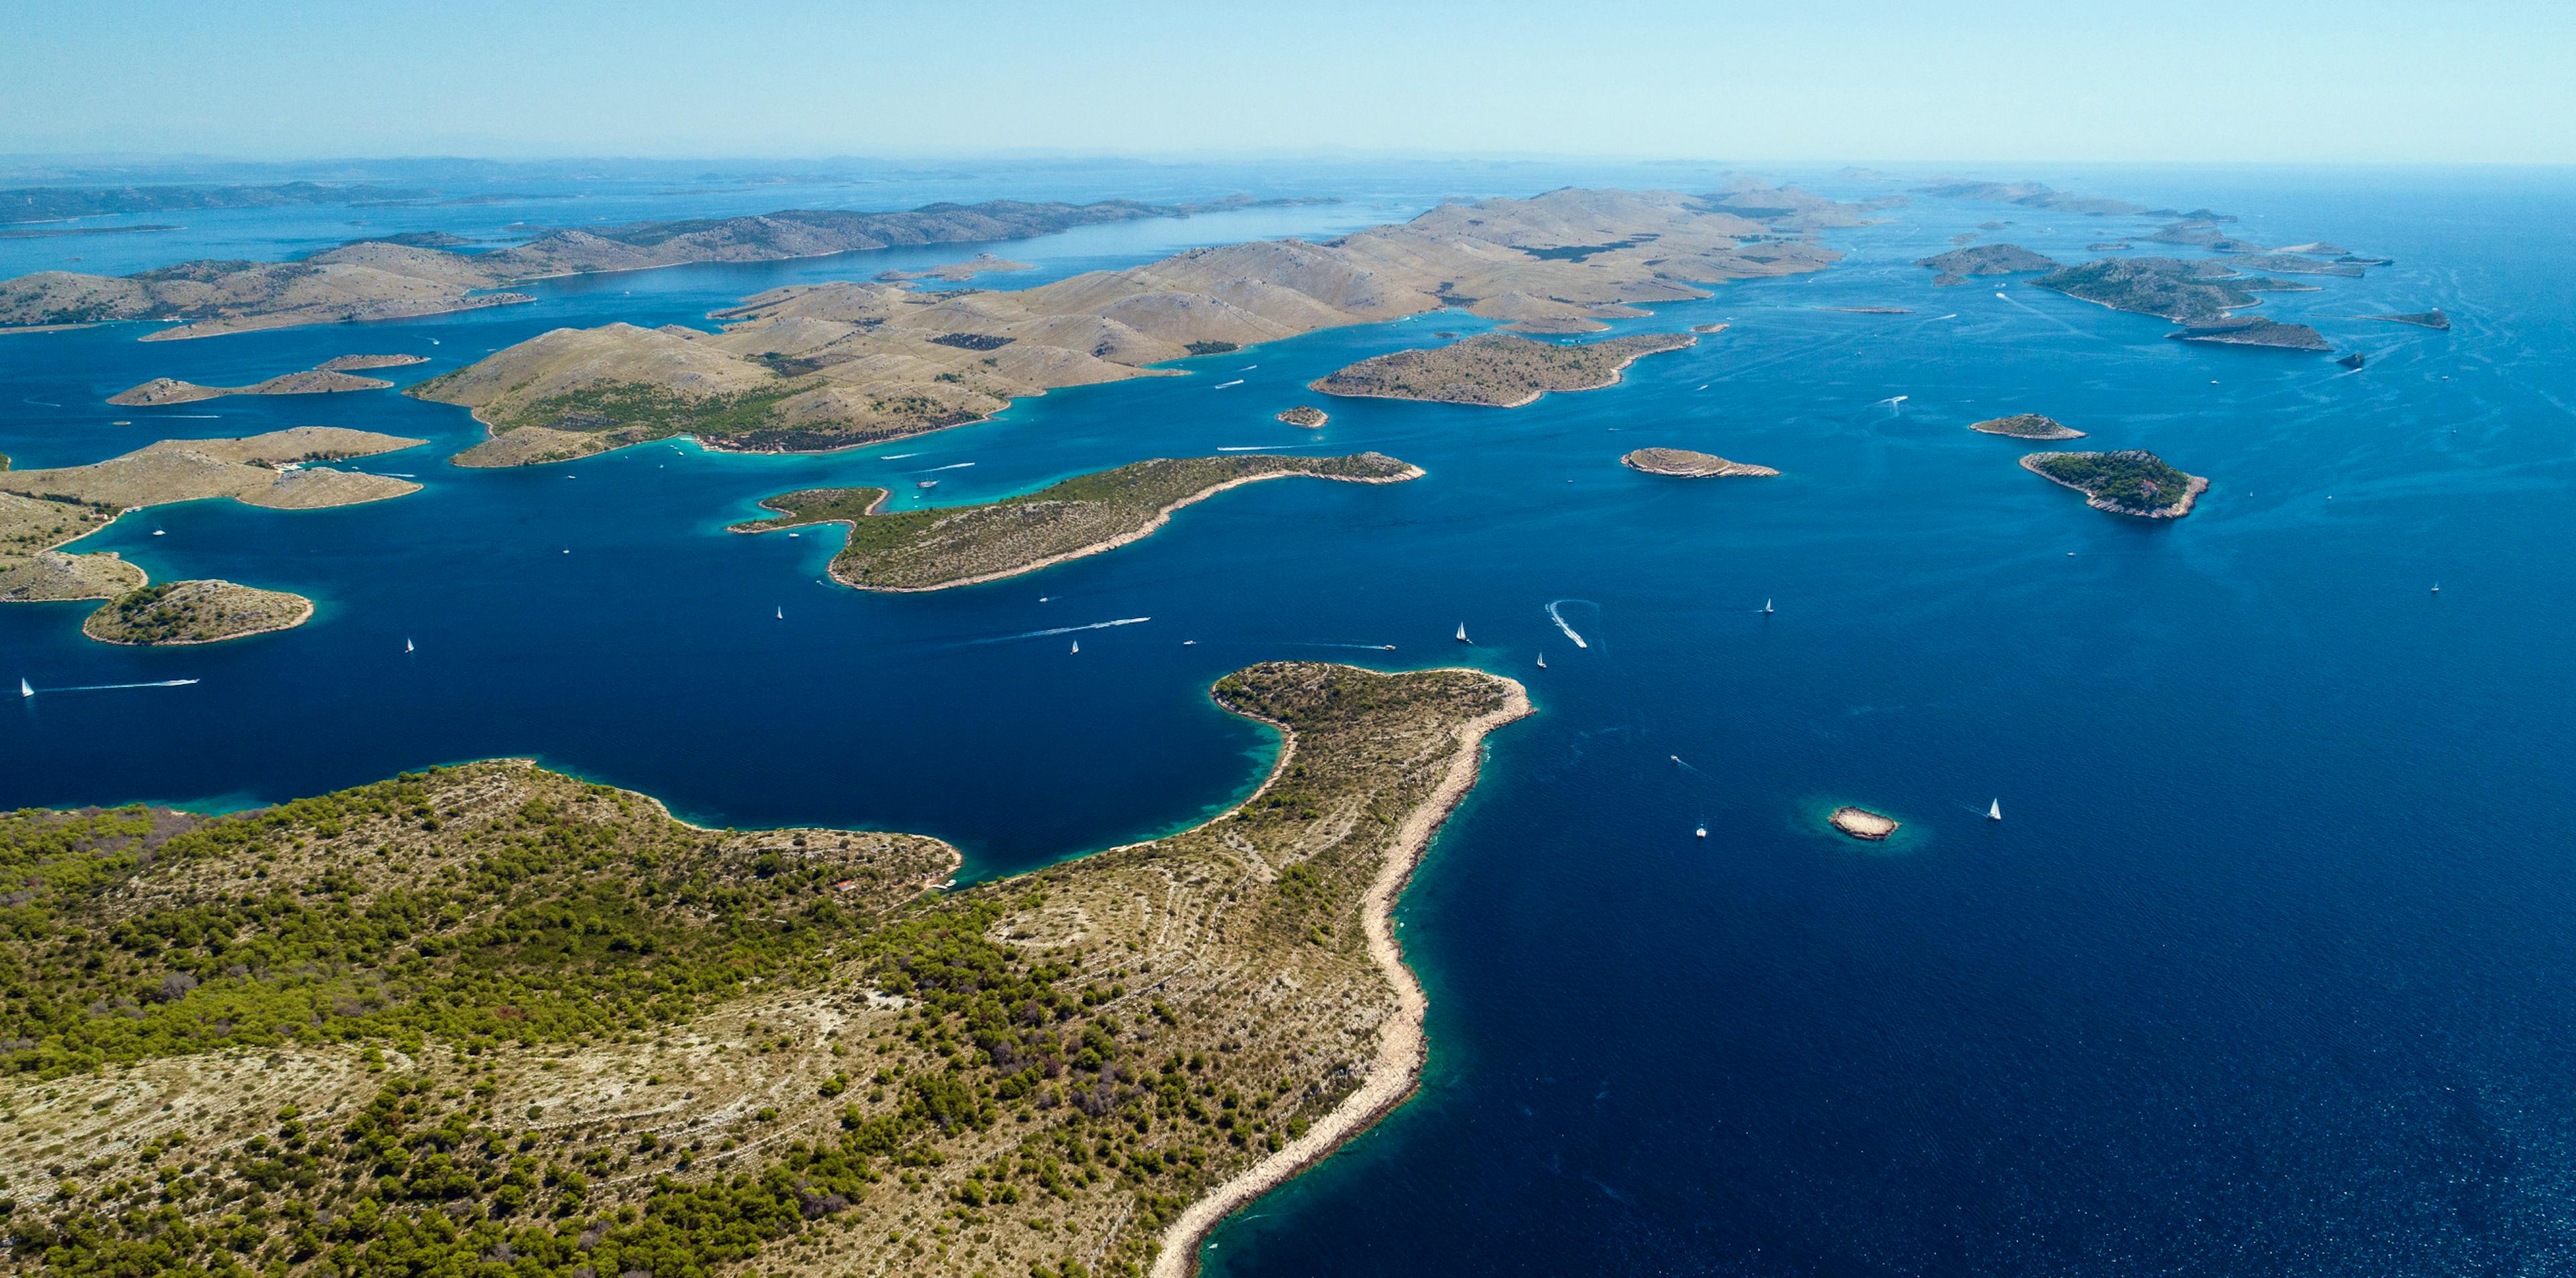 Kornati Islands Sailing: Best Spots To Visit By Boat